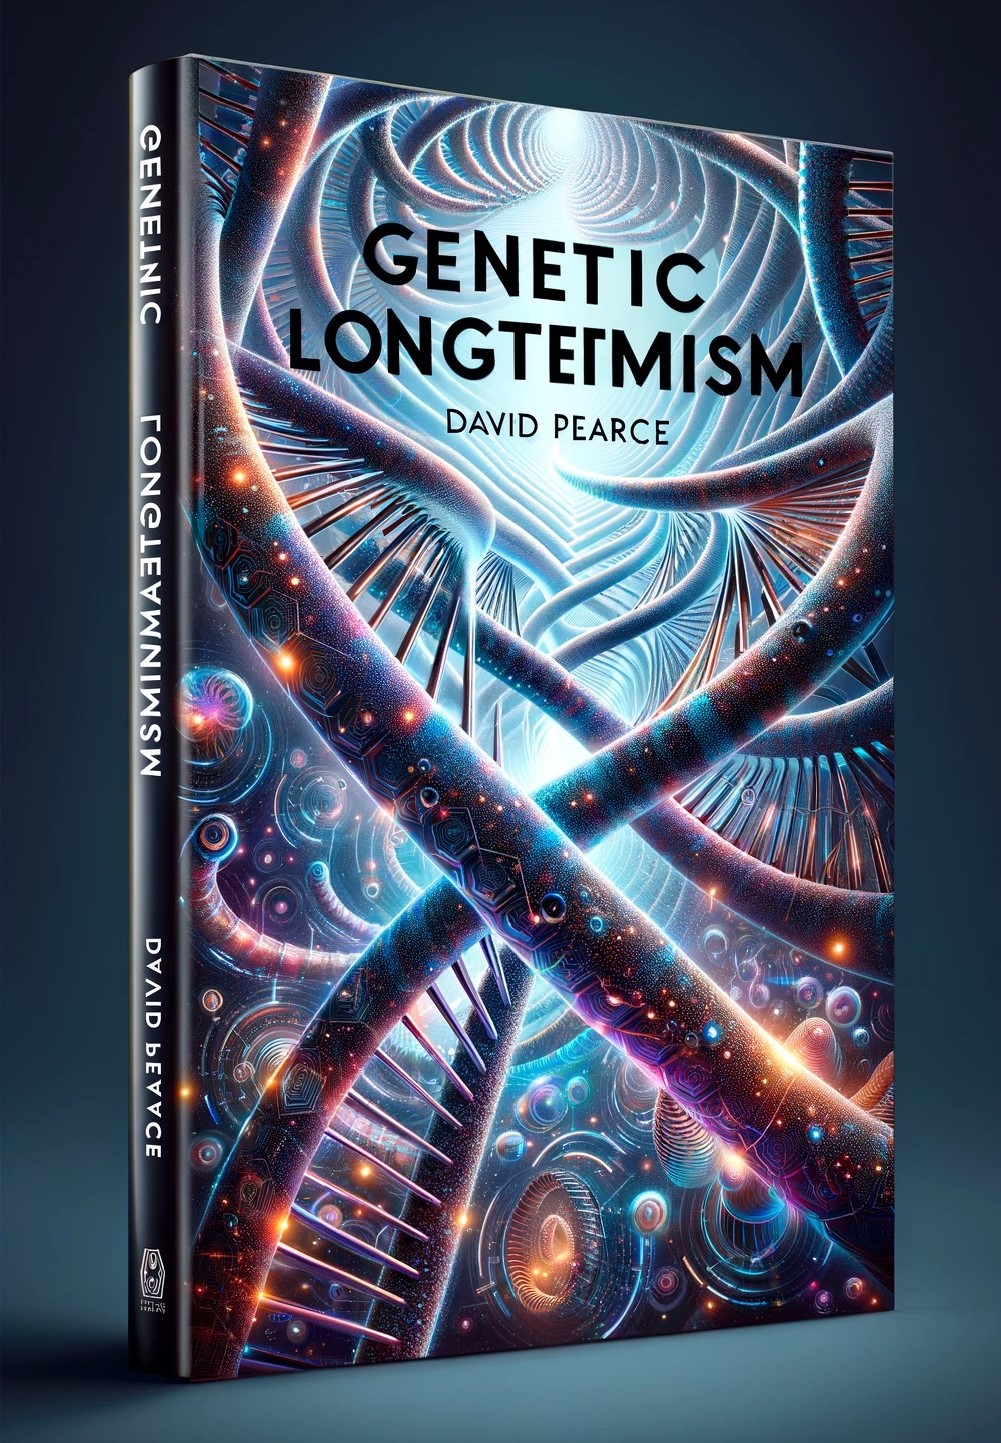 Genetic Longtermism  by David Pearce